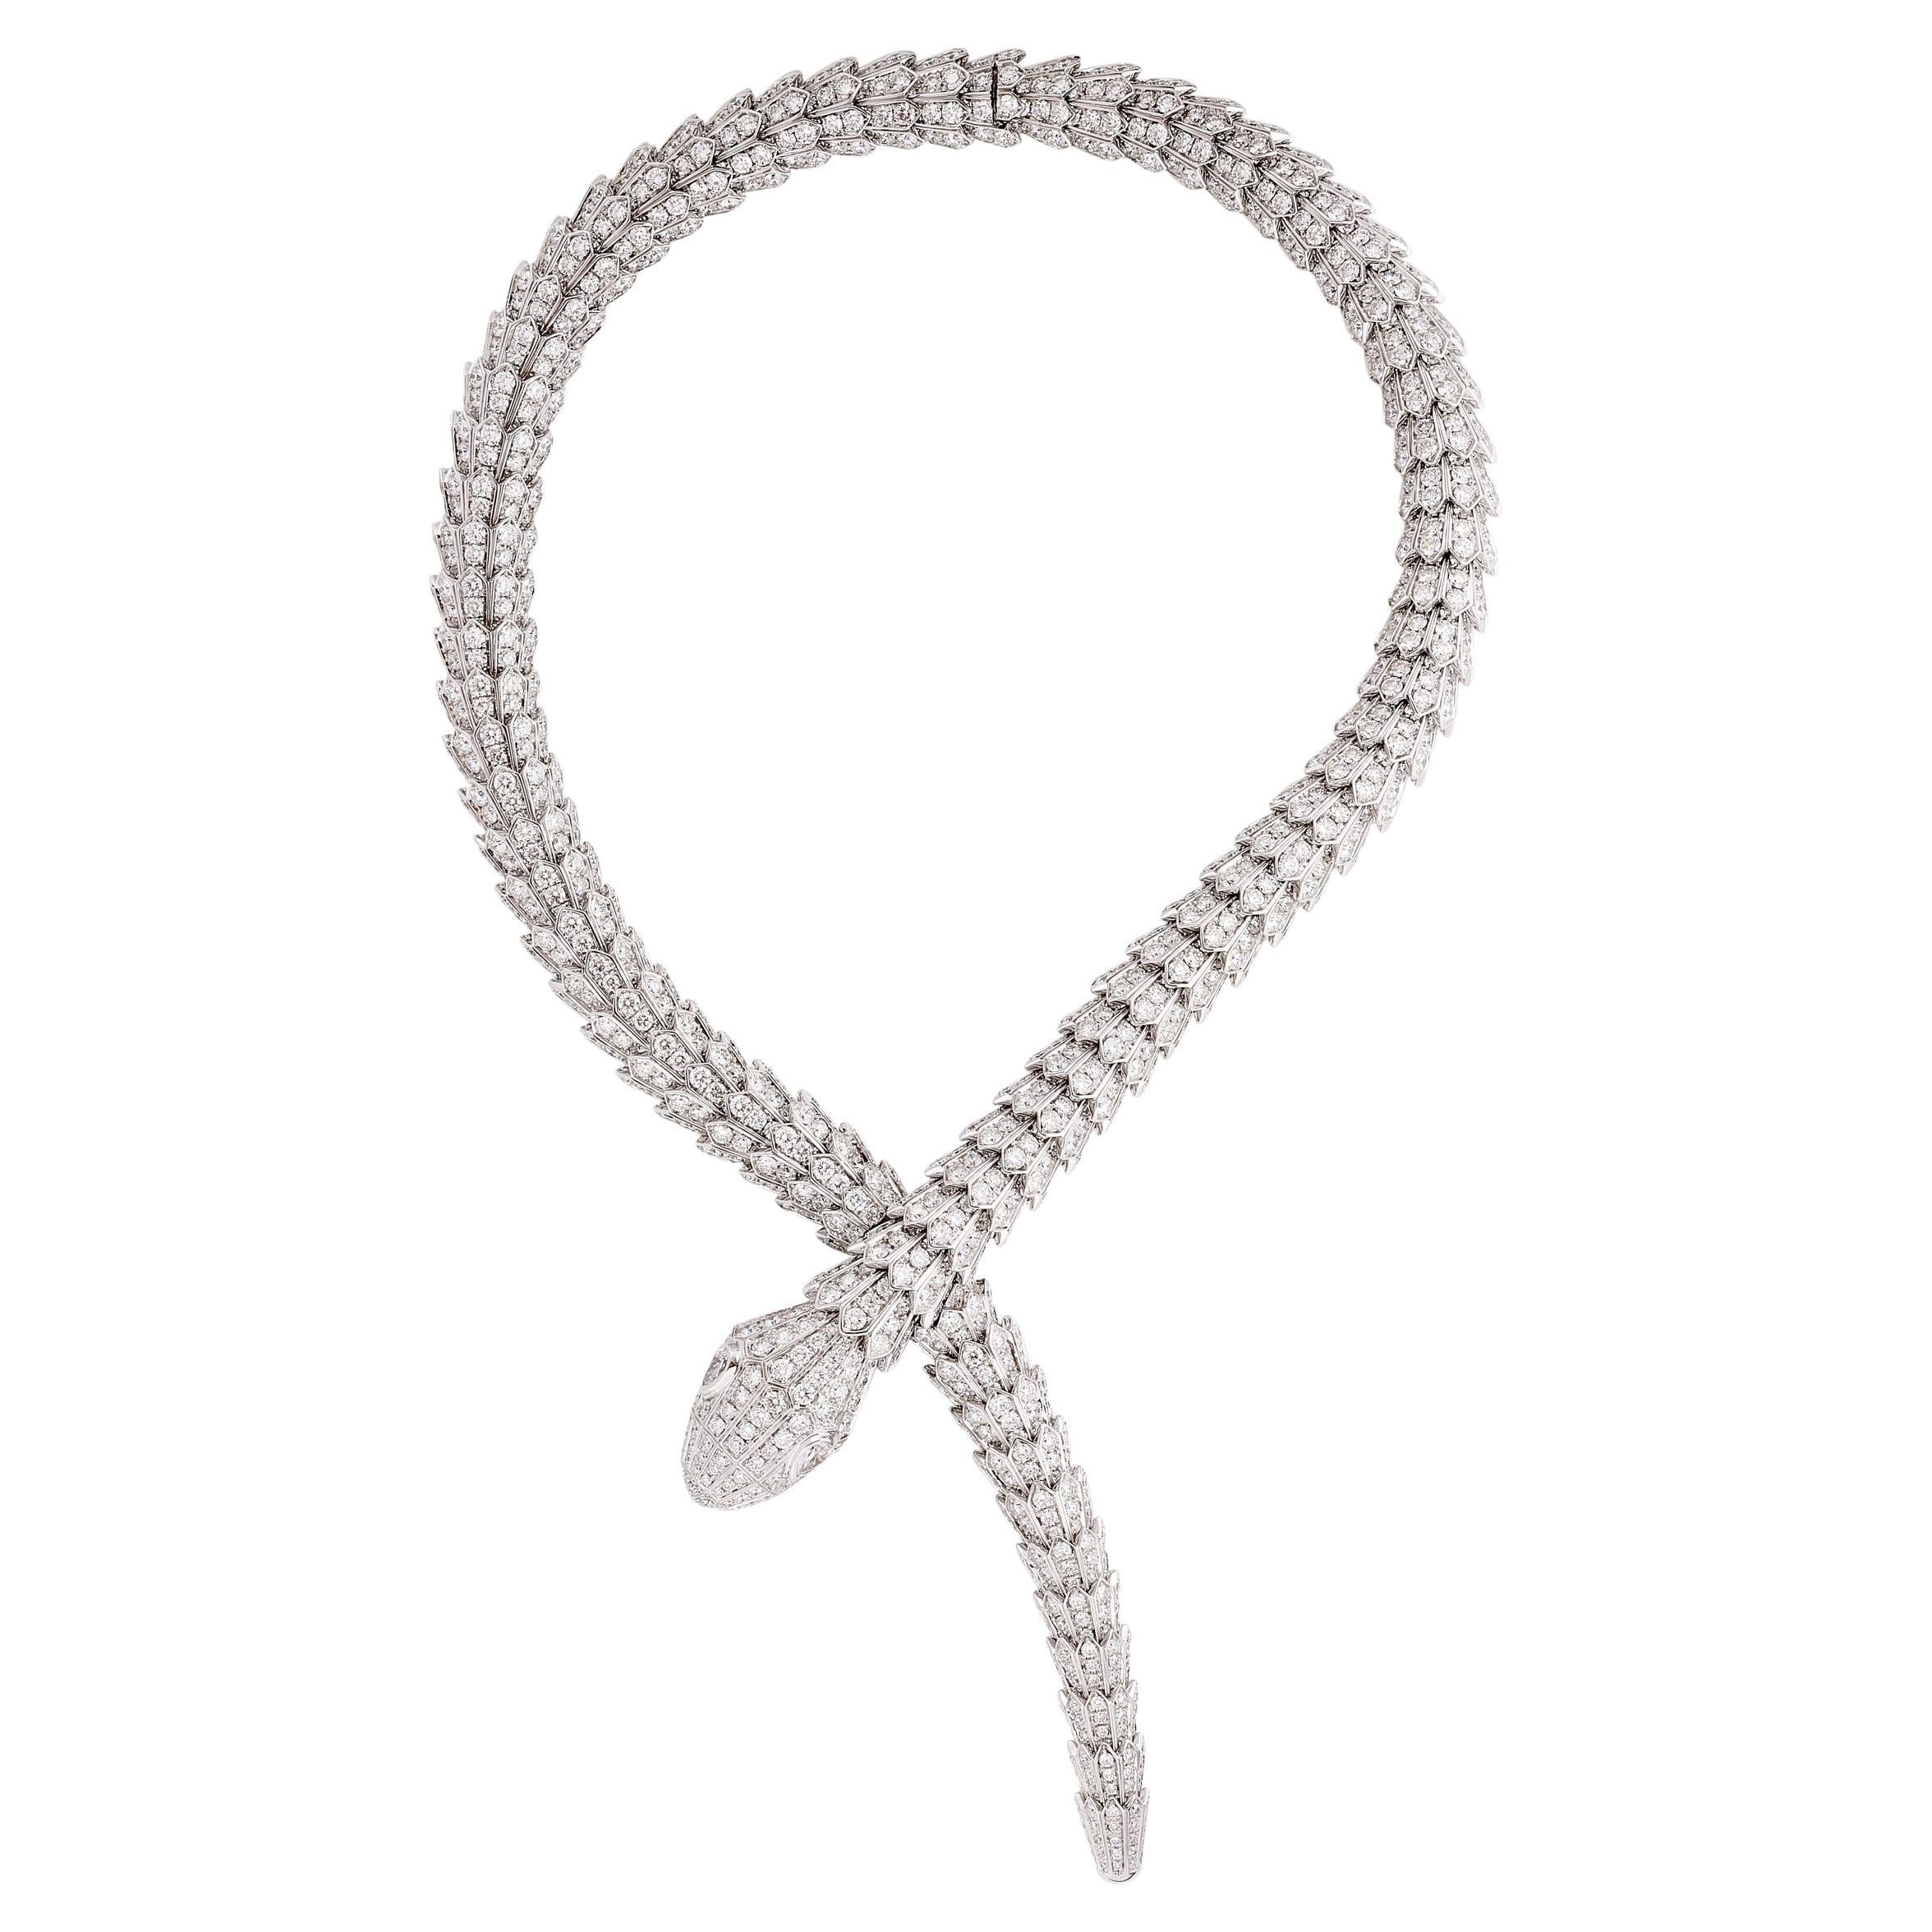 Bulgari Serpenti Diamond Snake Necklace in 18k White Gold